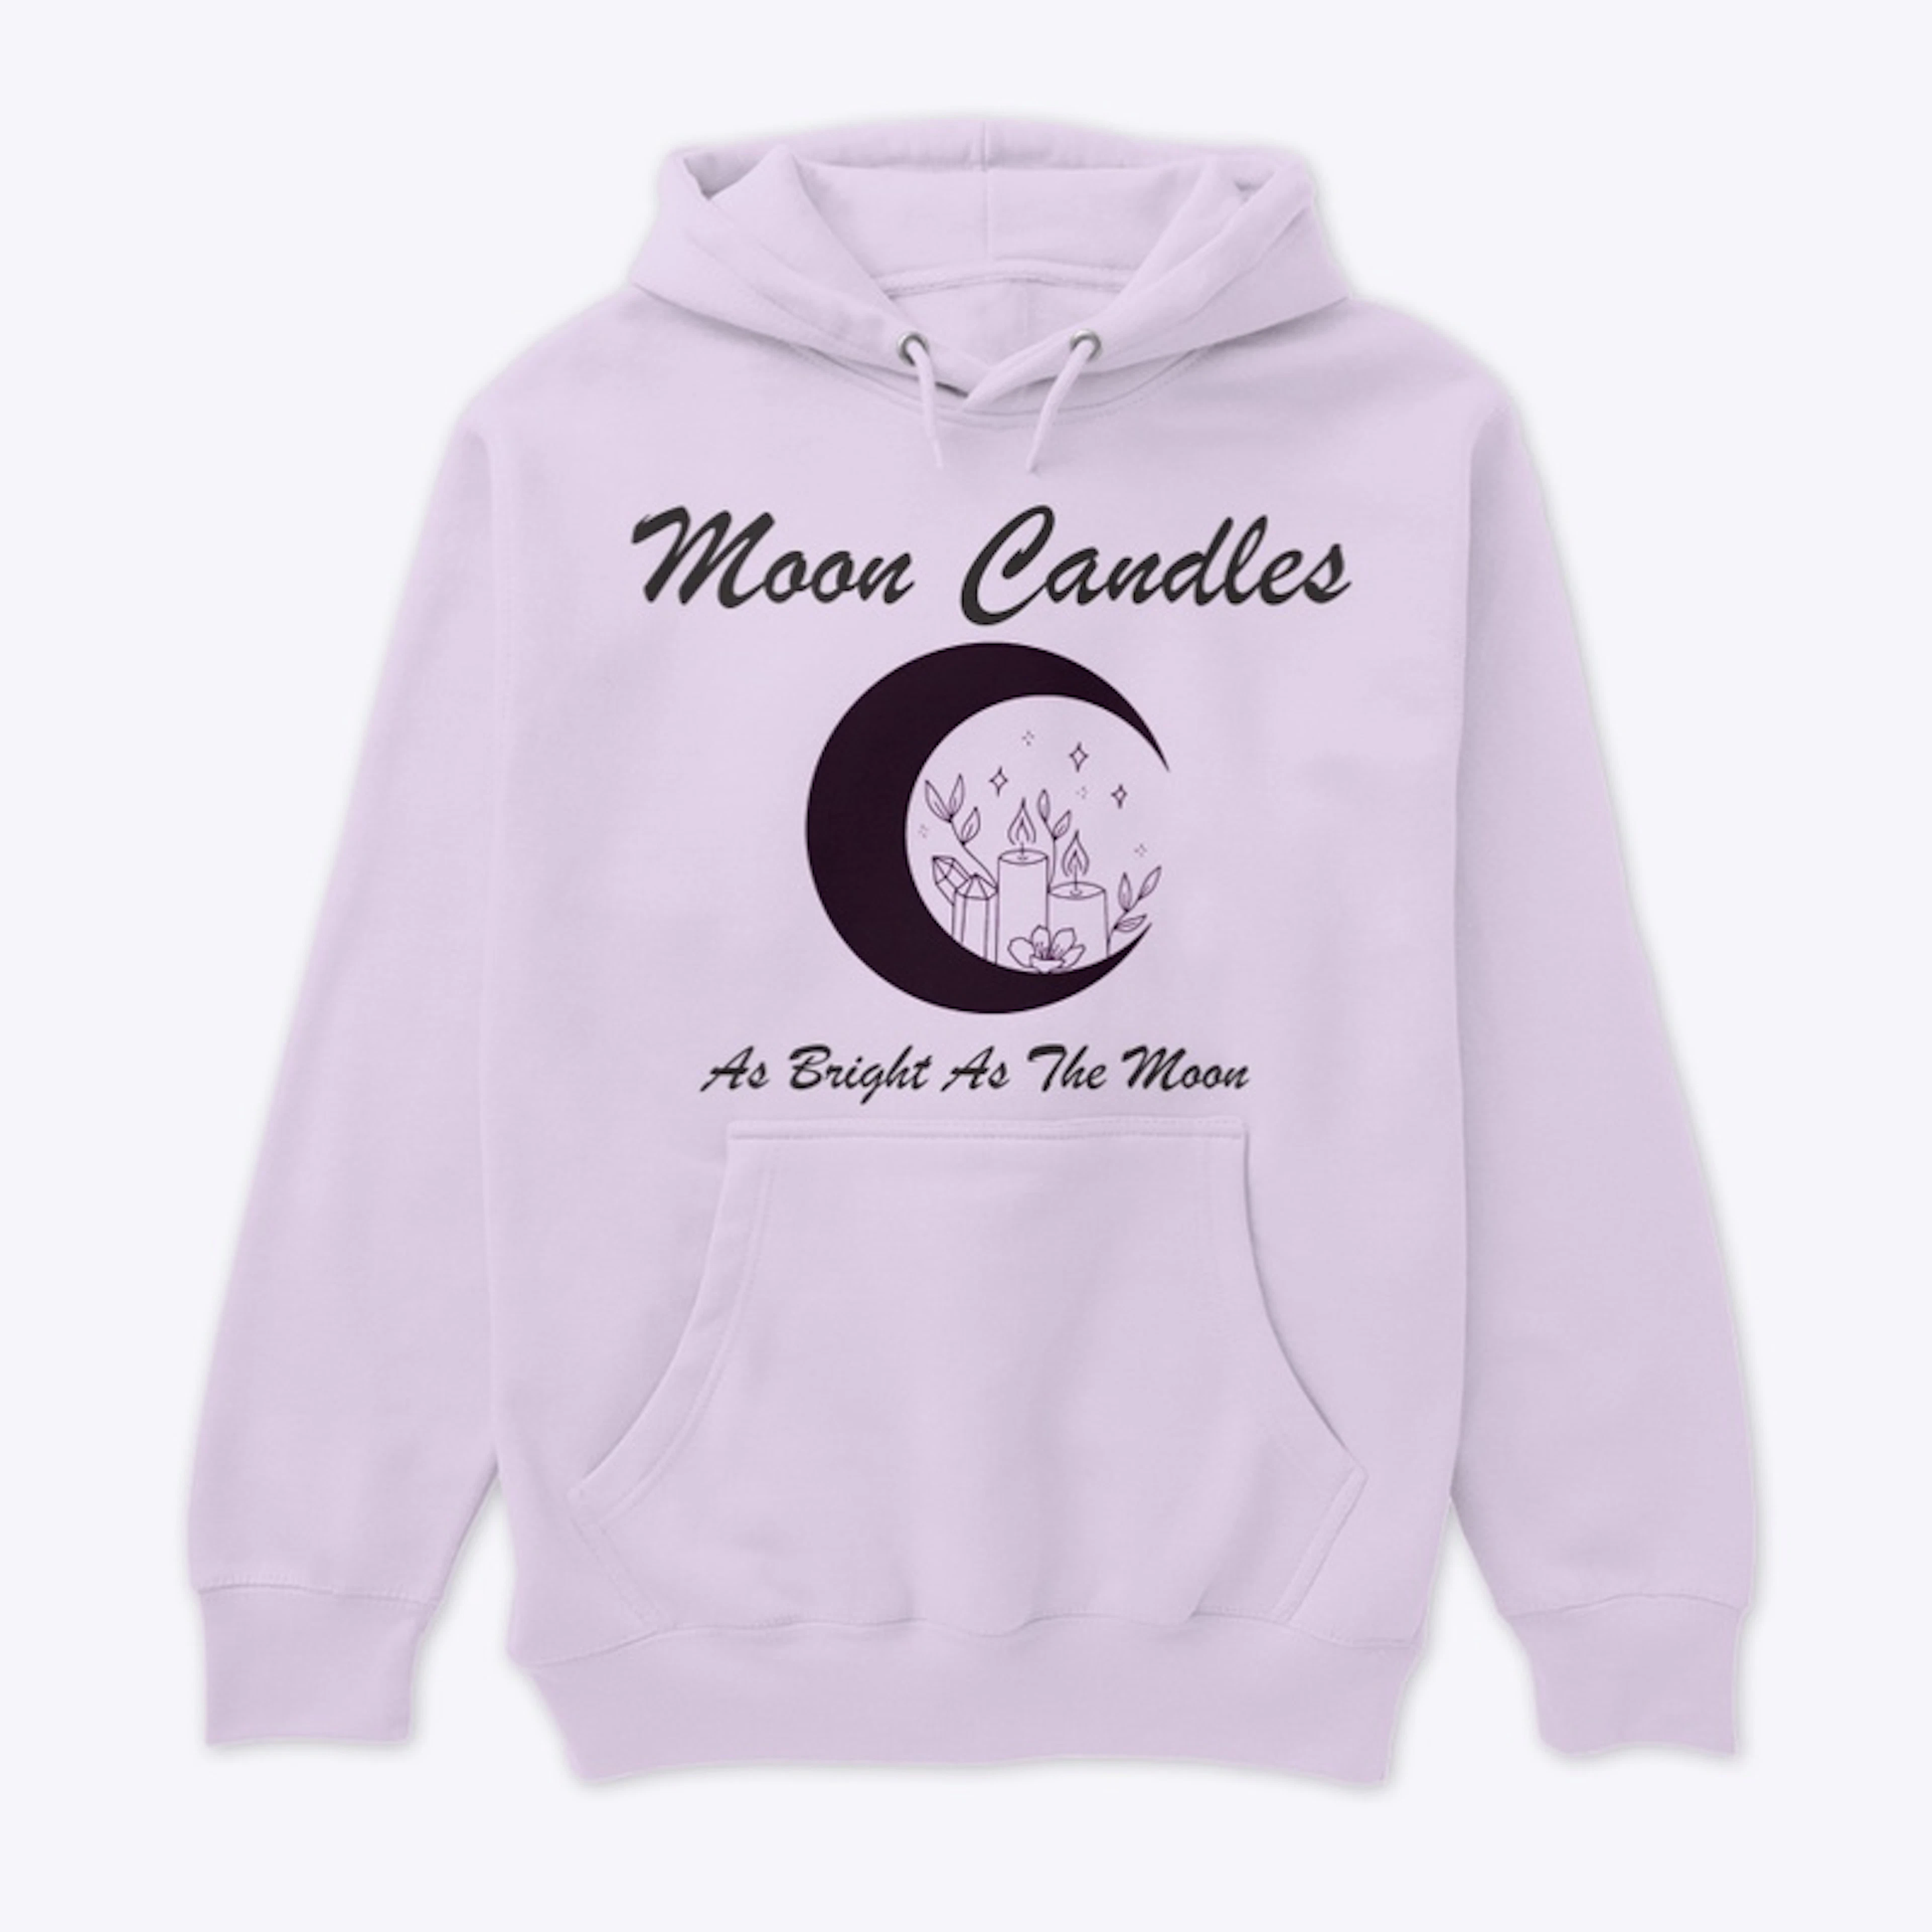 MoonXcandles